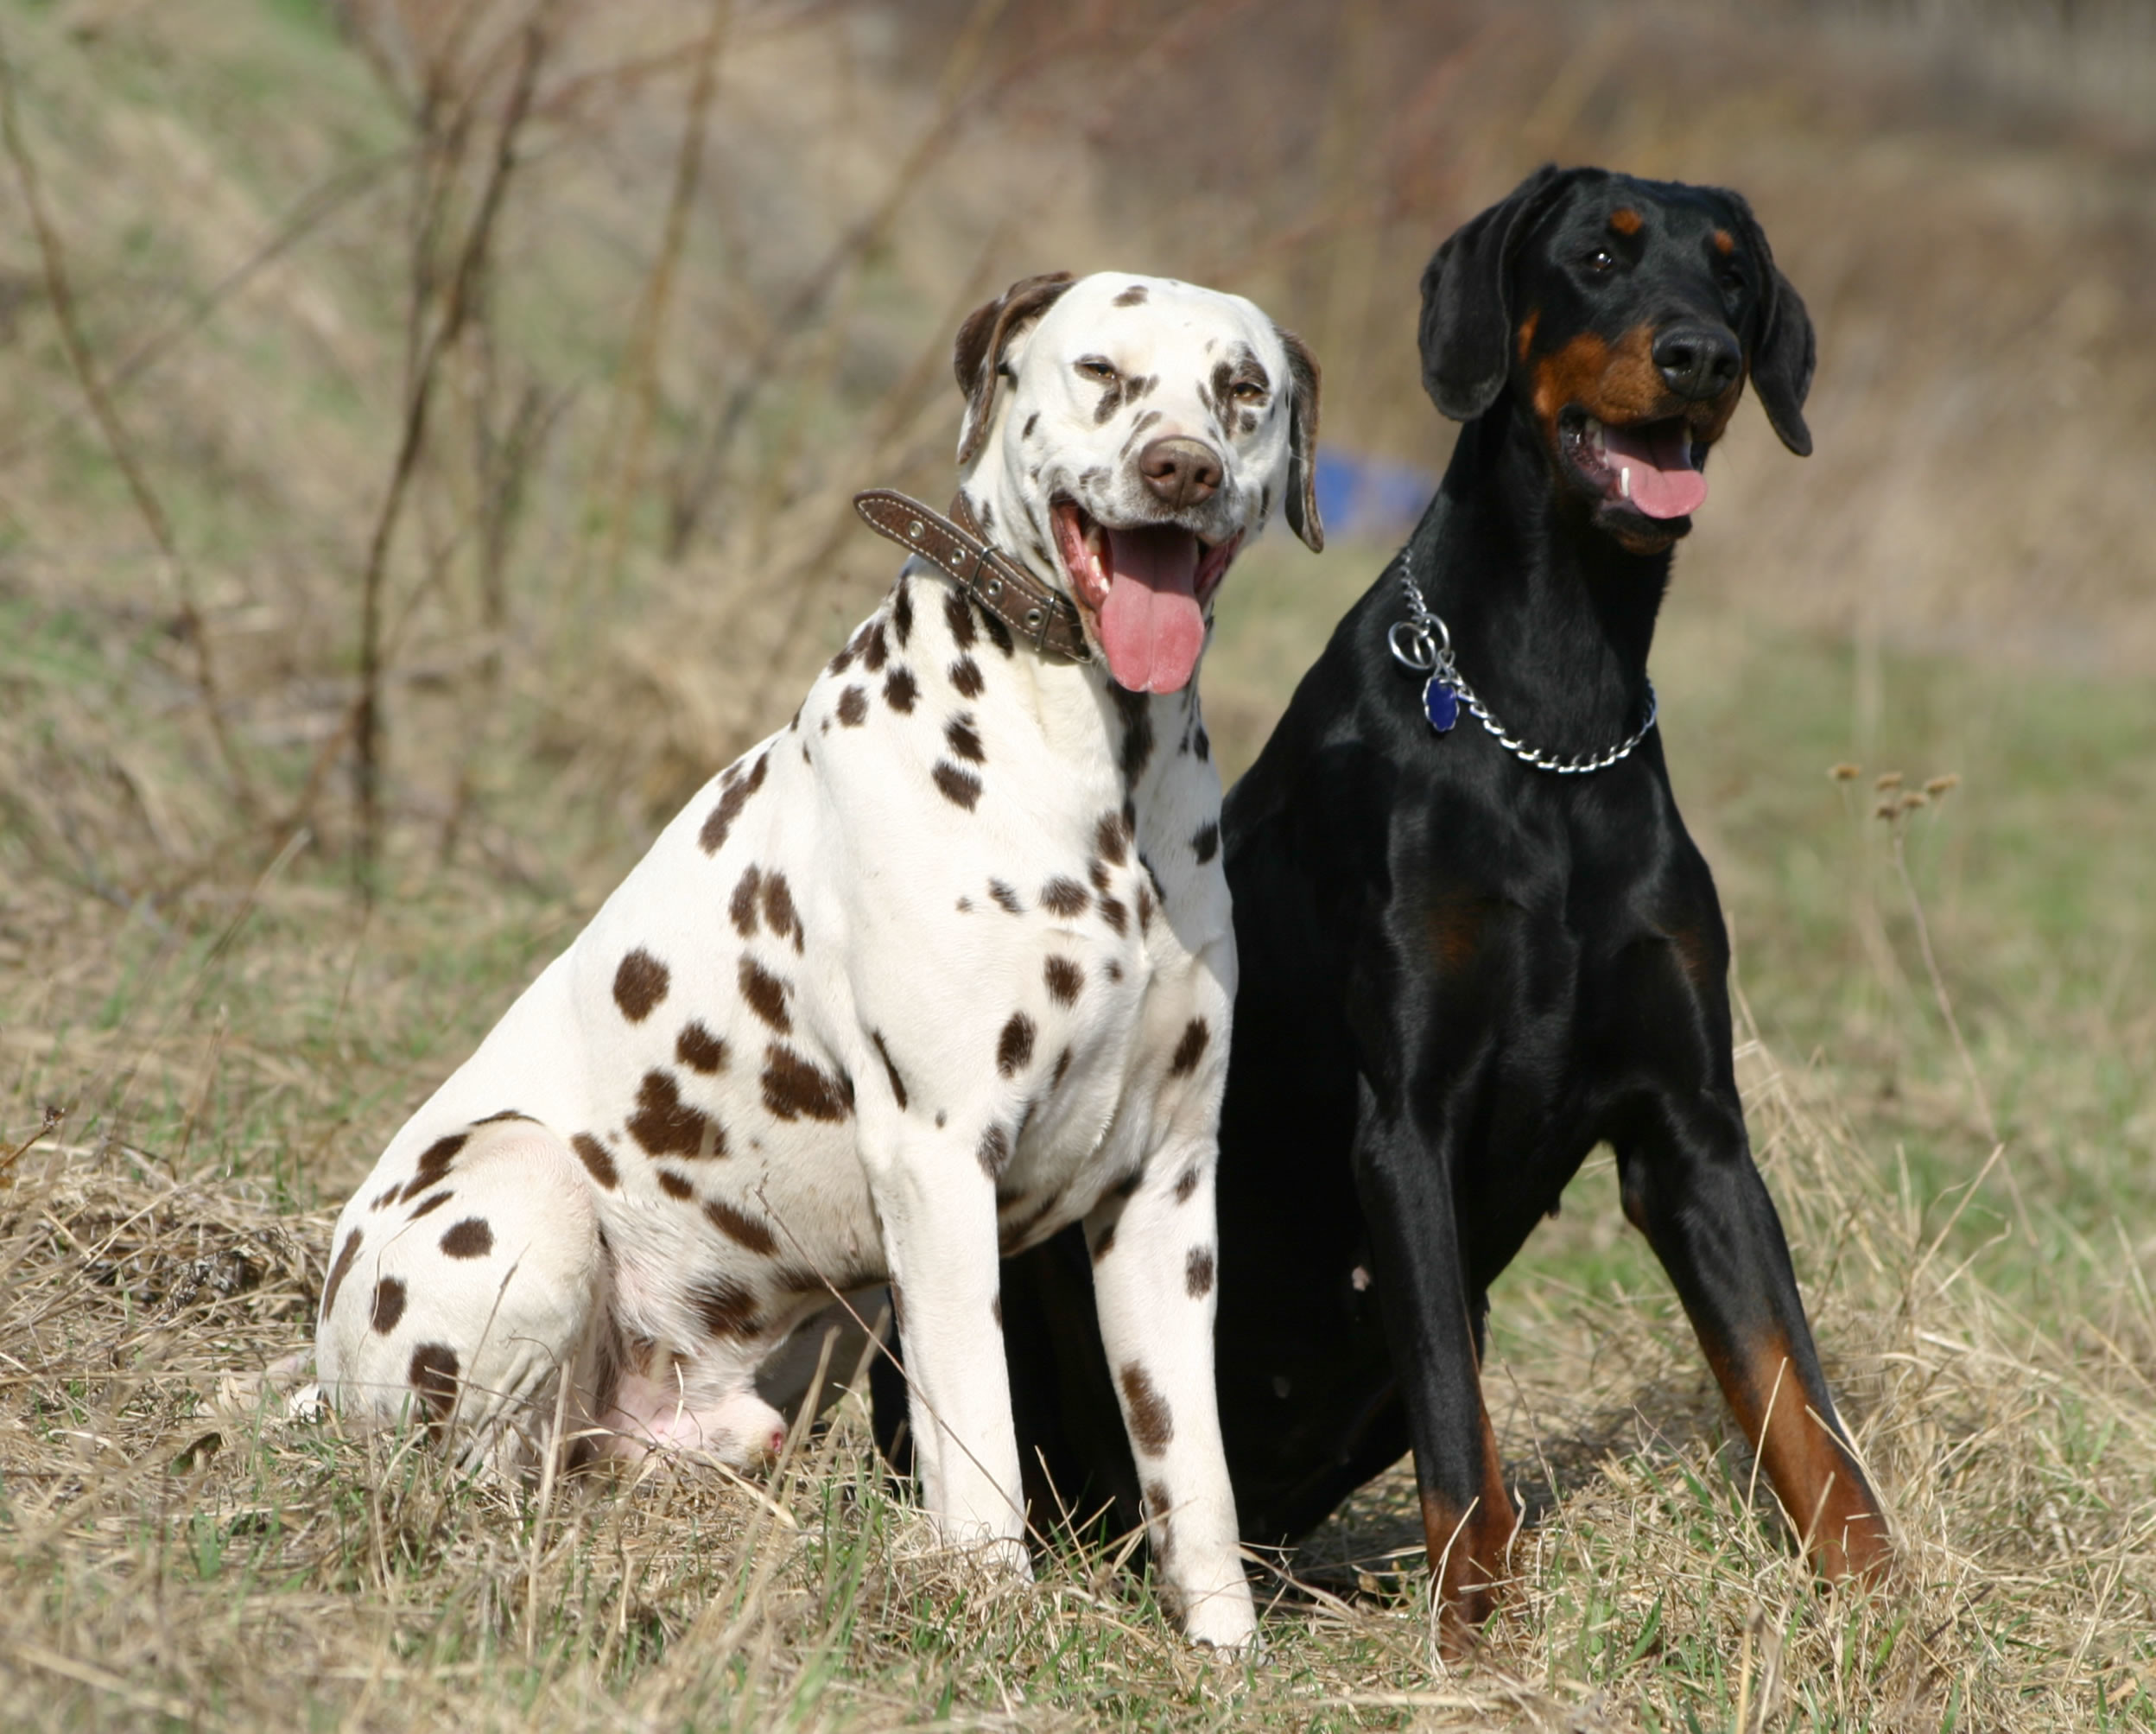 2496x2007 Dalmatian and Labrador mix. Dalmatian dog with patches